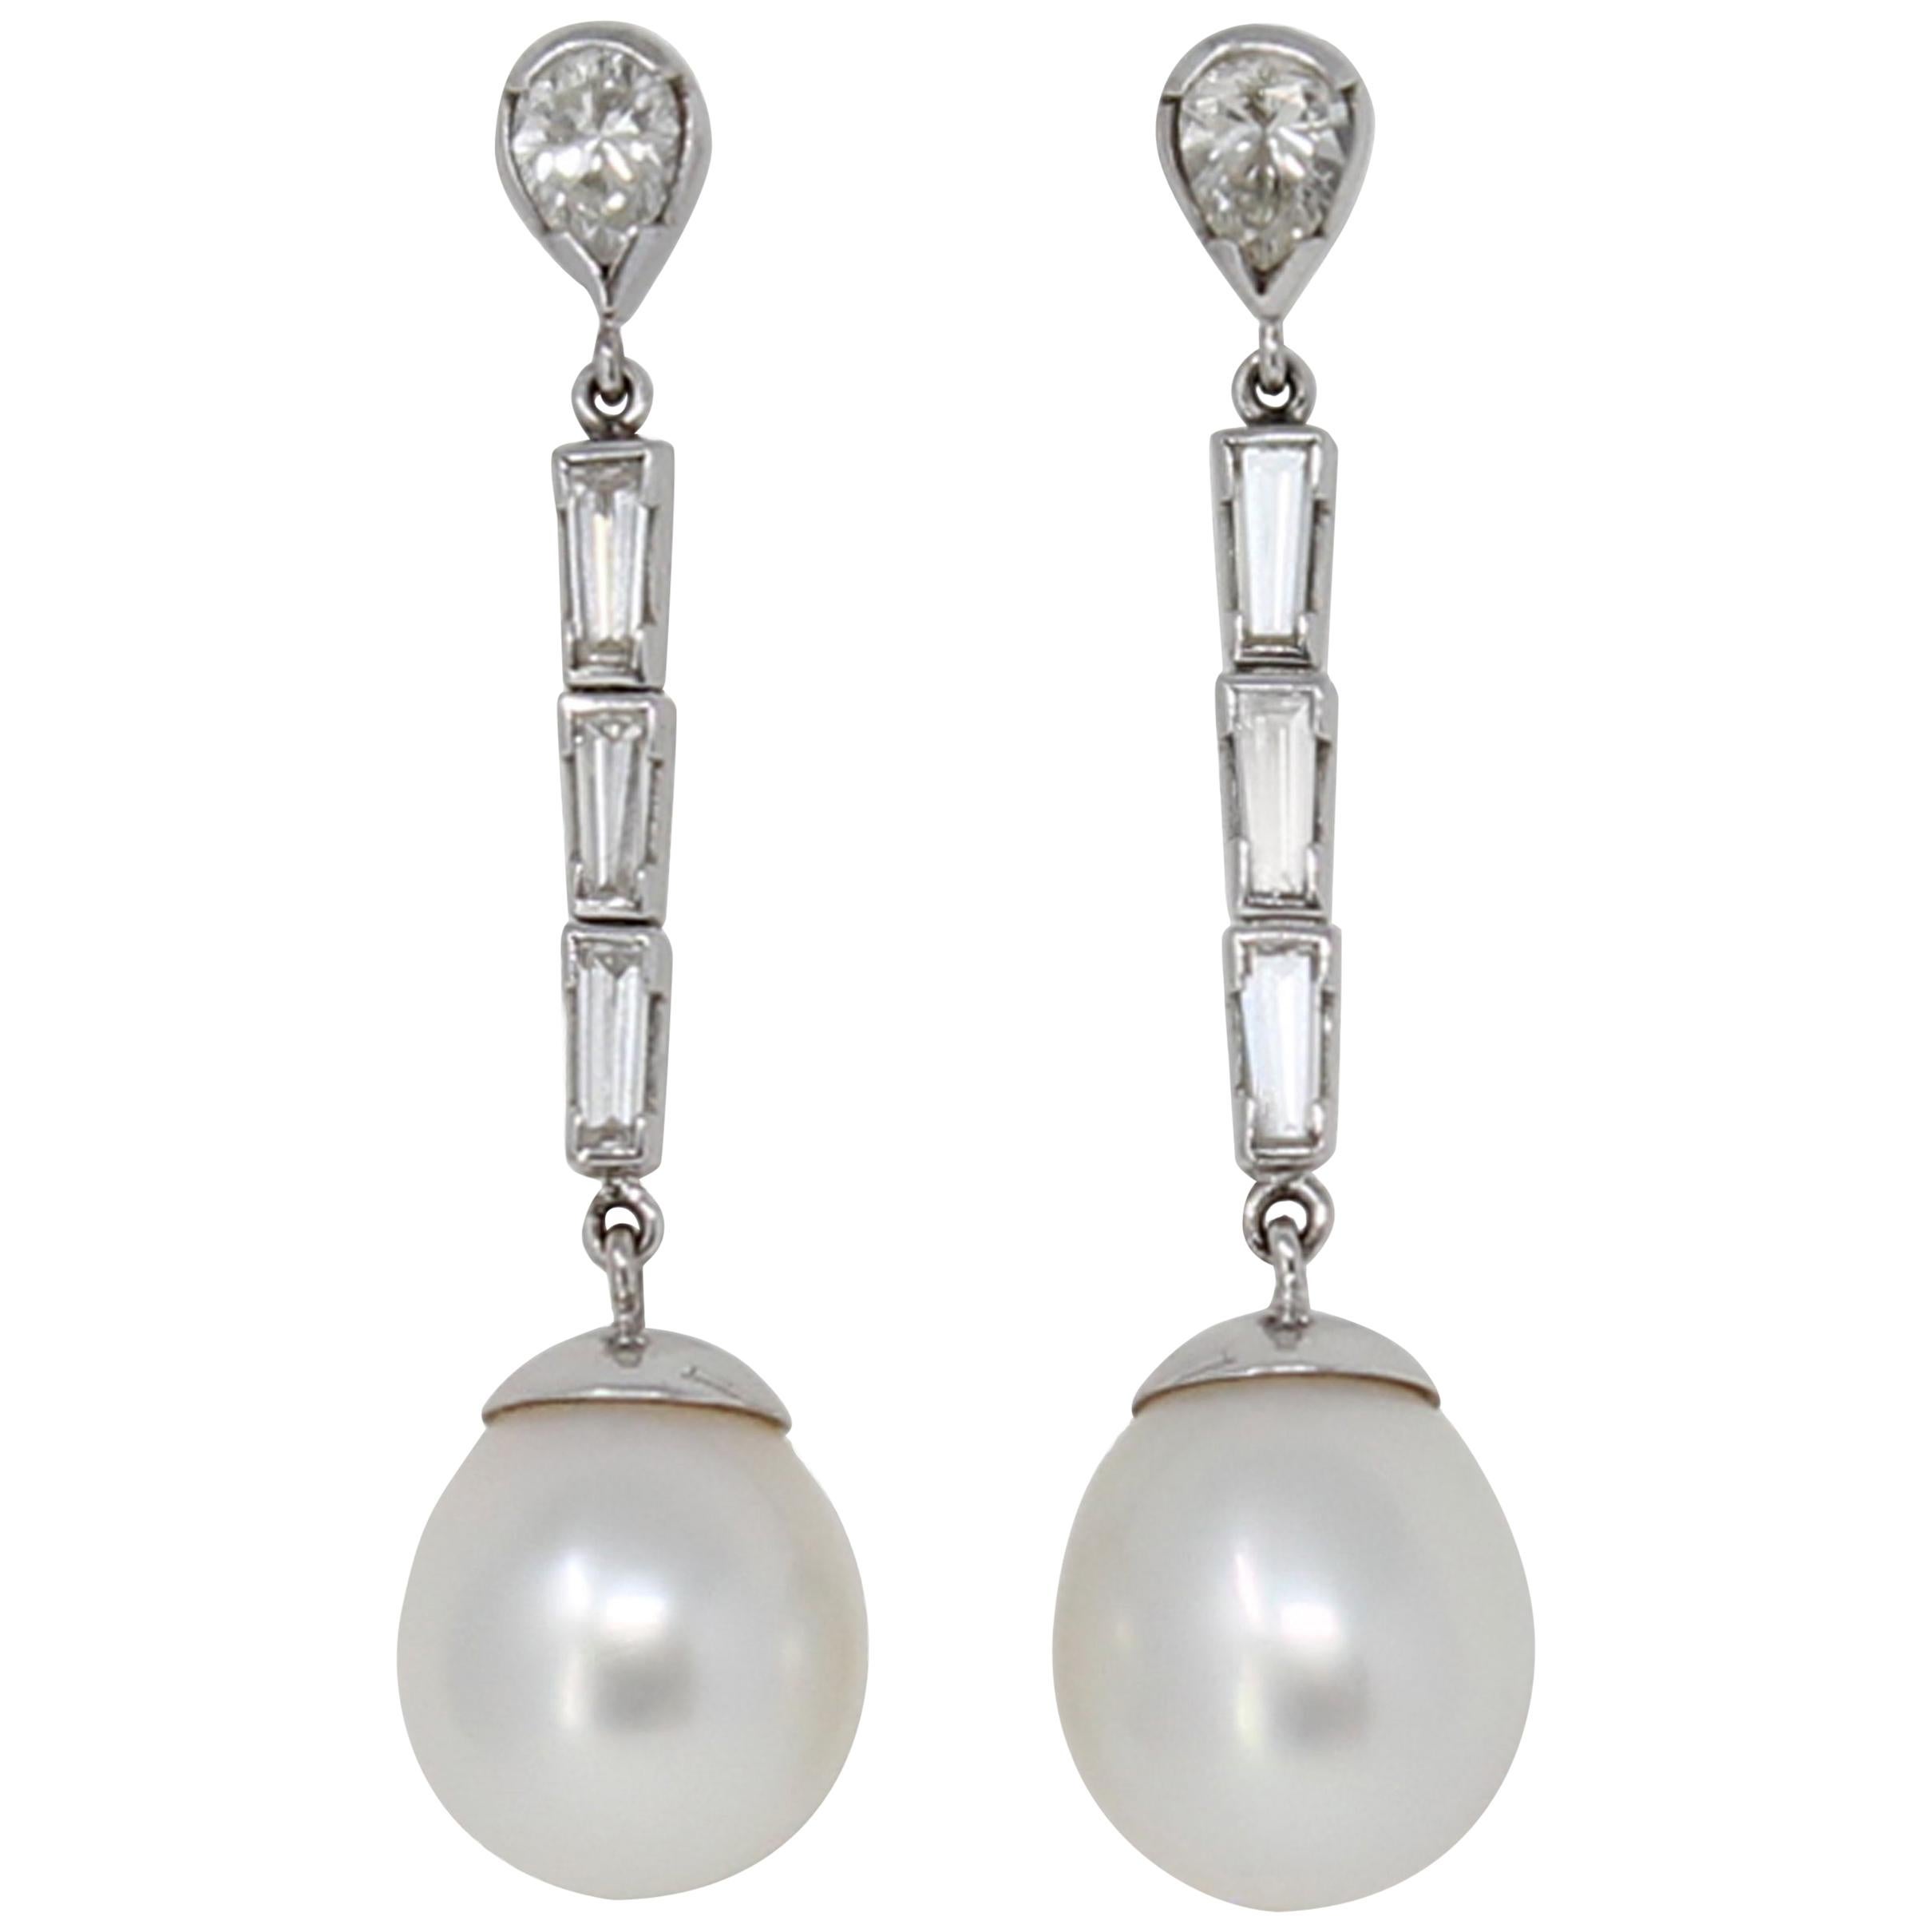 Pair of Italian South Sea Pearl and Diamond Dangling Earrings in 18 Karat Gold